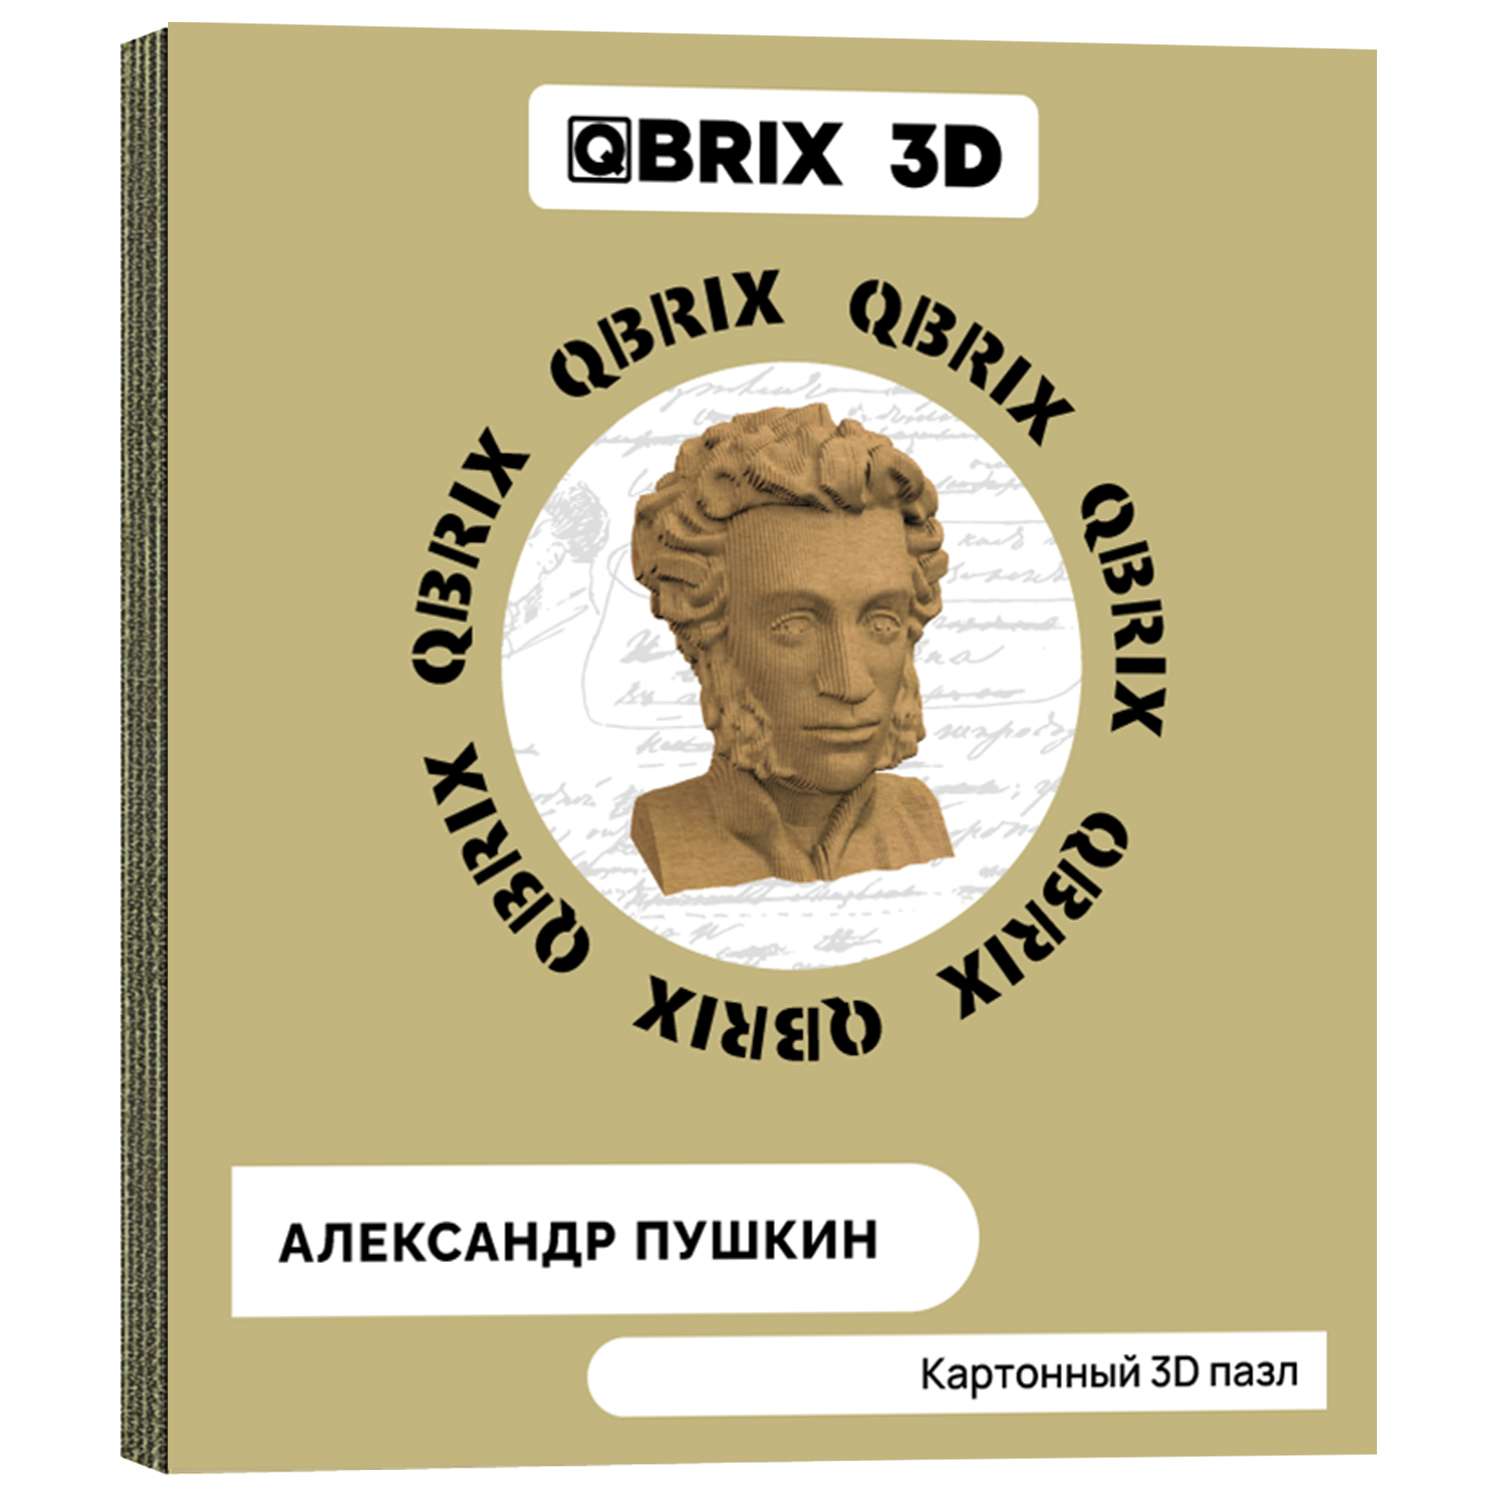 Конструктор QBRIX 3D картонный Александр Пушкин 20014 20014 - фото 1